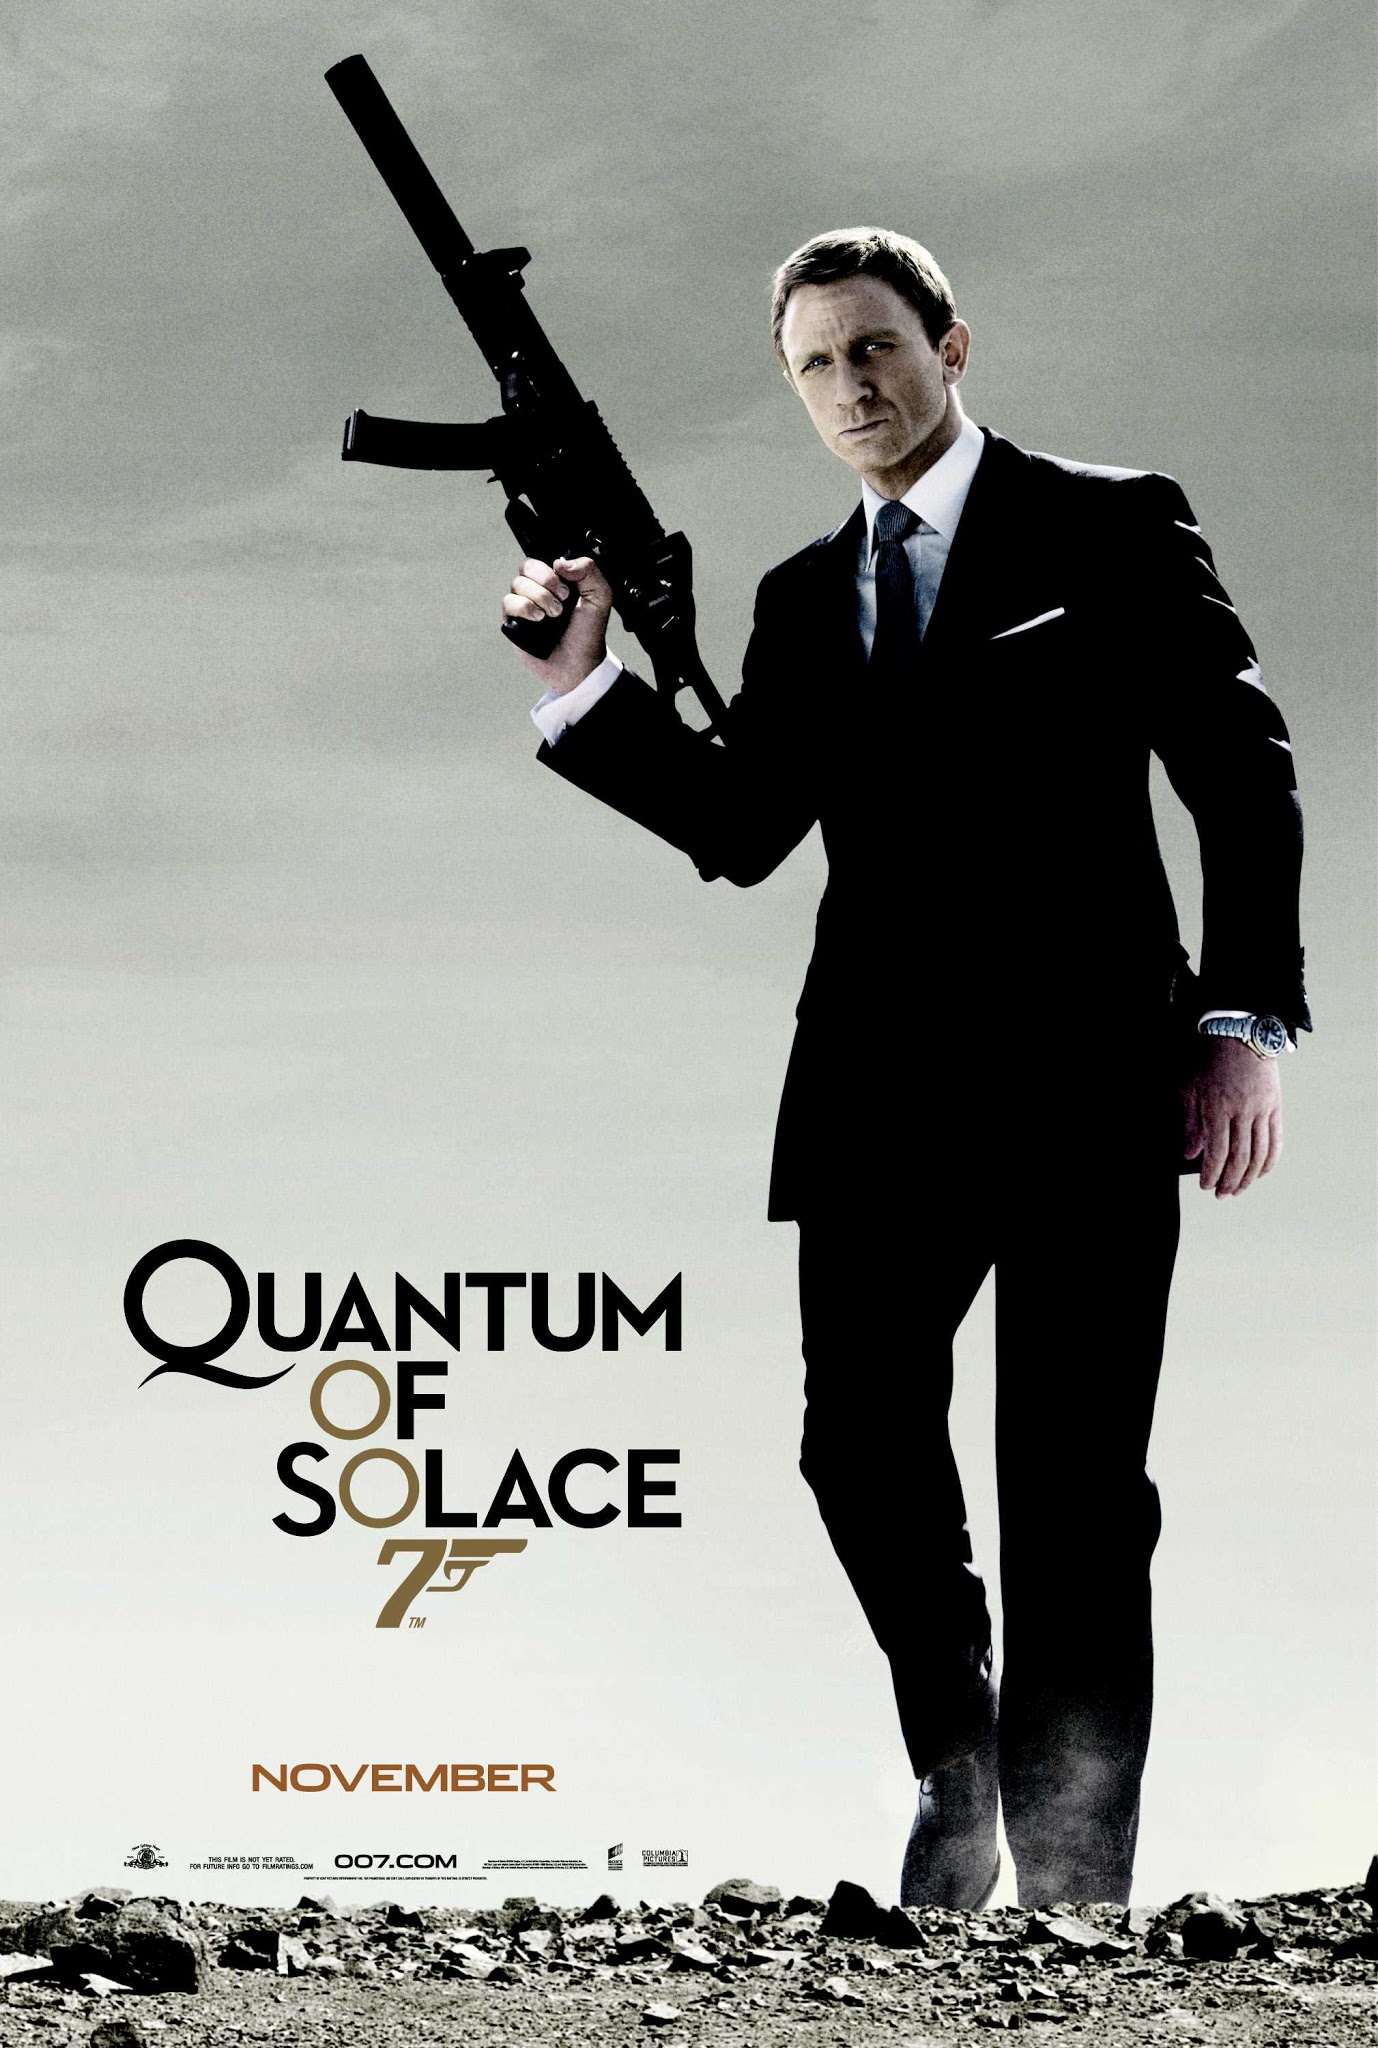 james bond 007 film recenzja plakat daniel craig